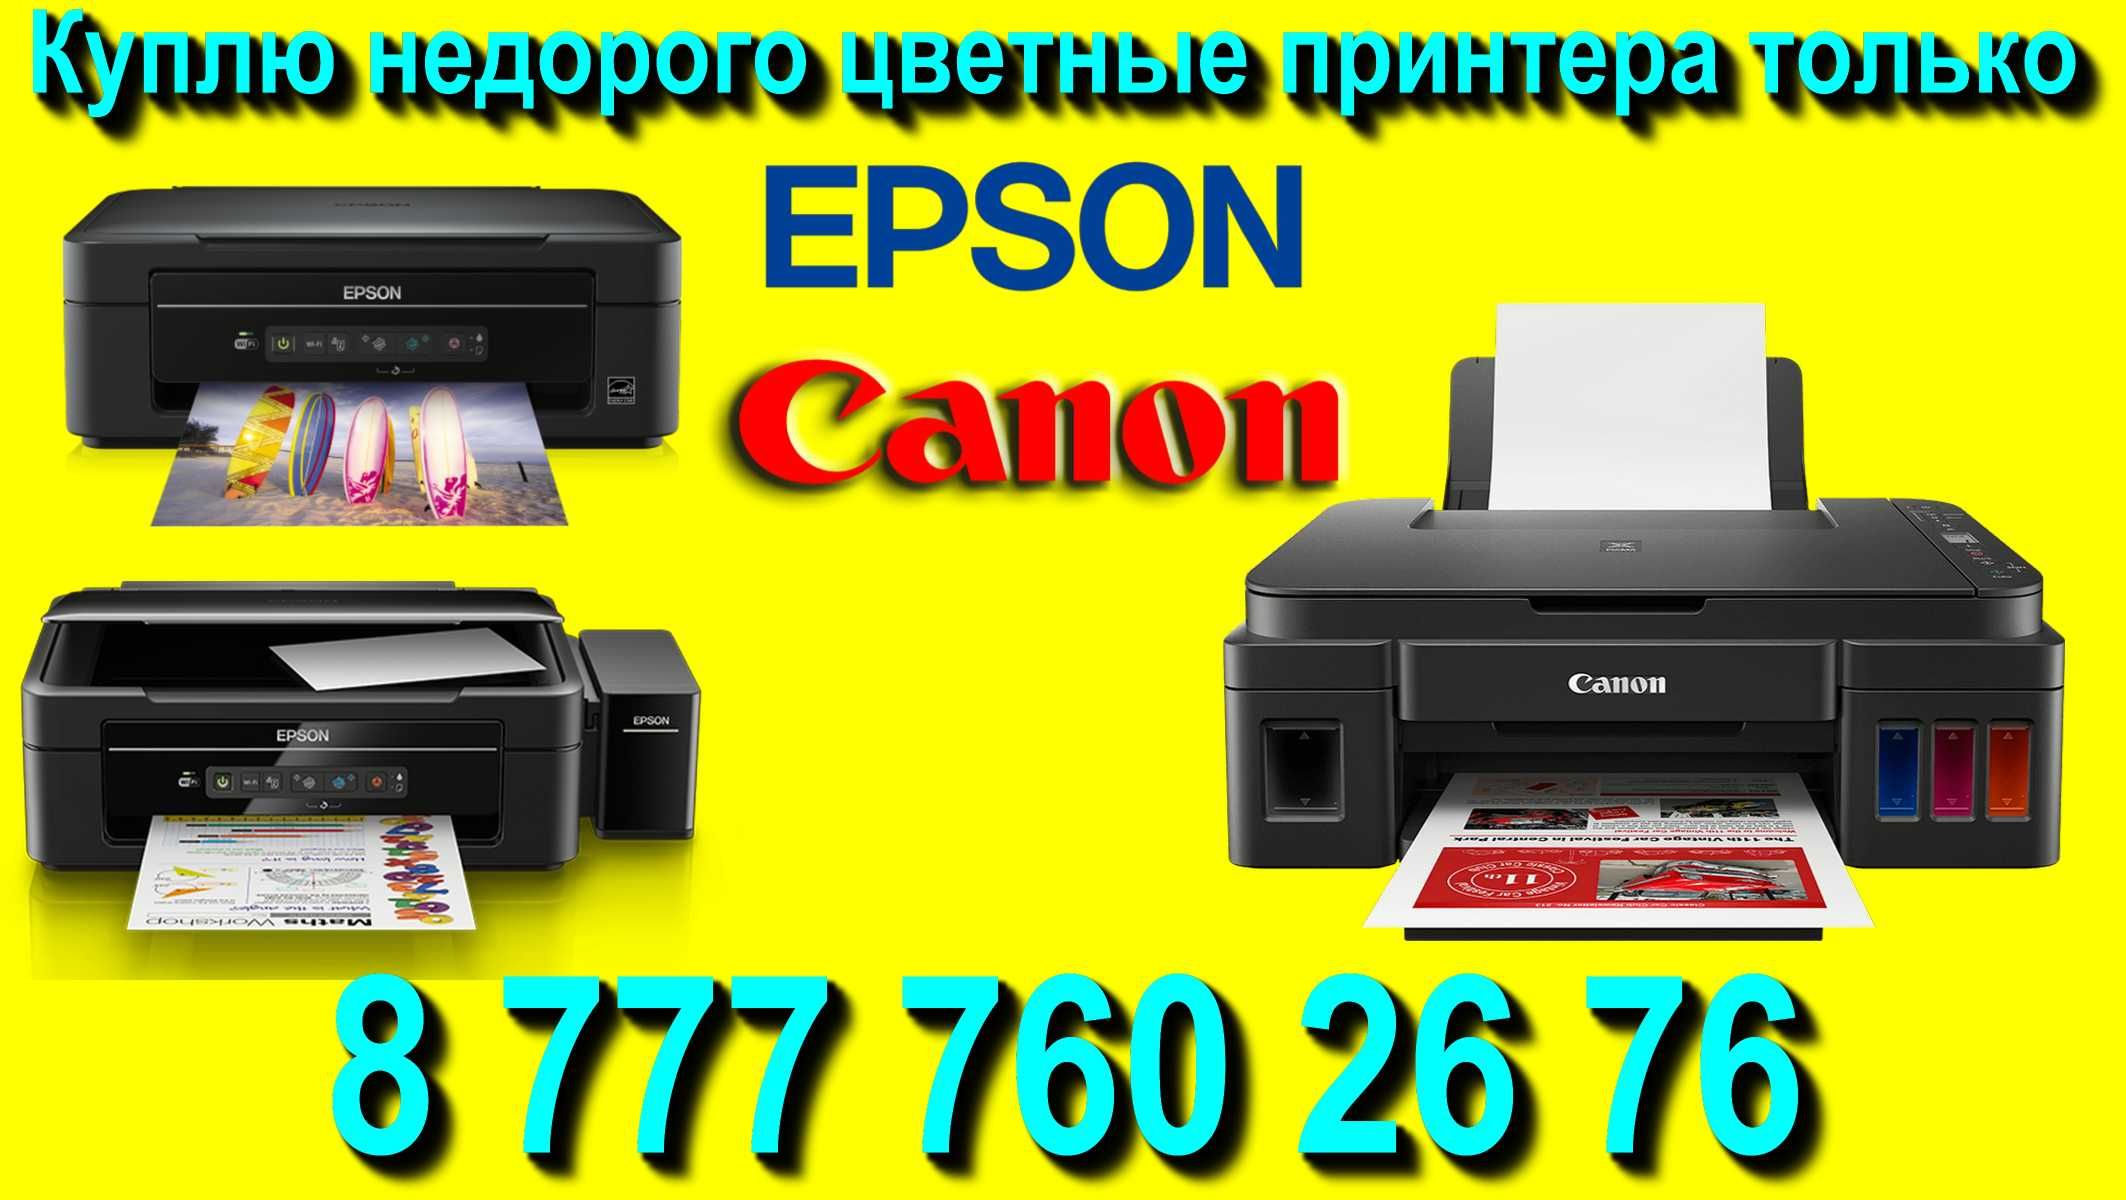 Сервис "VICTORY" сброс абсорбера, ремонт и настройка Epson, Canon.